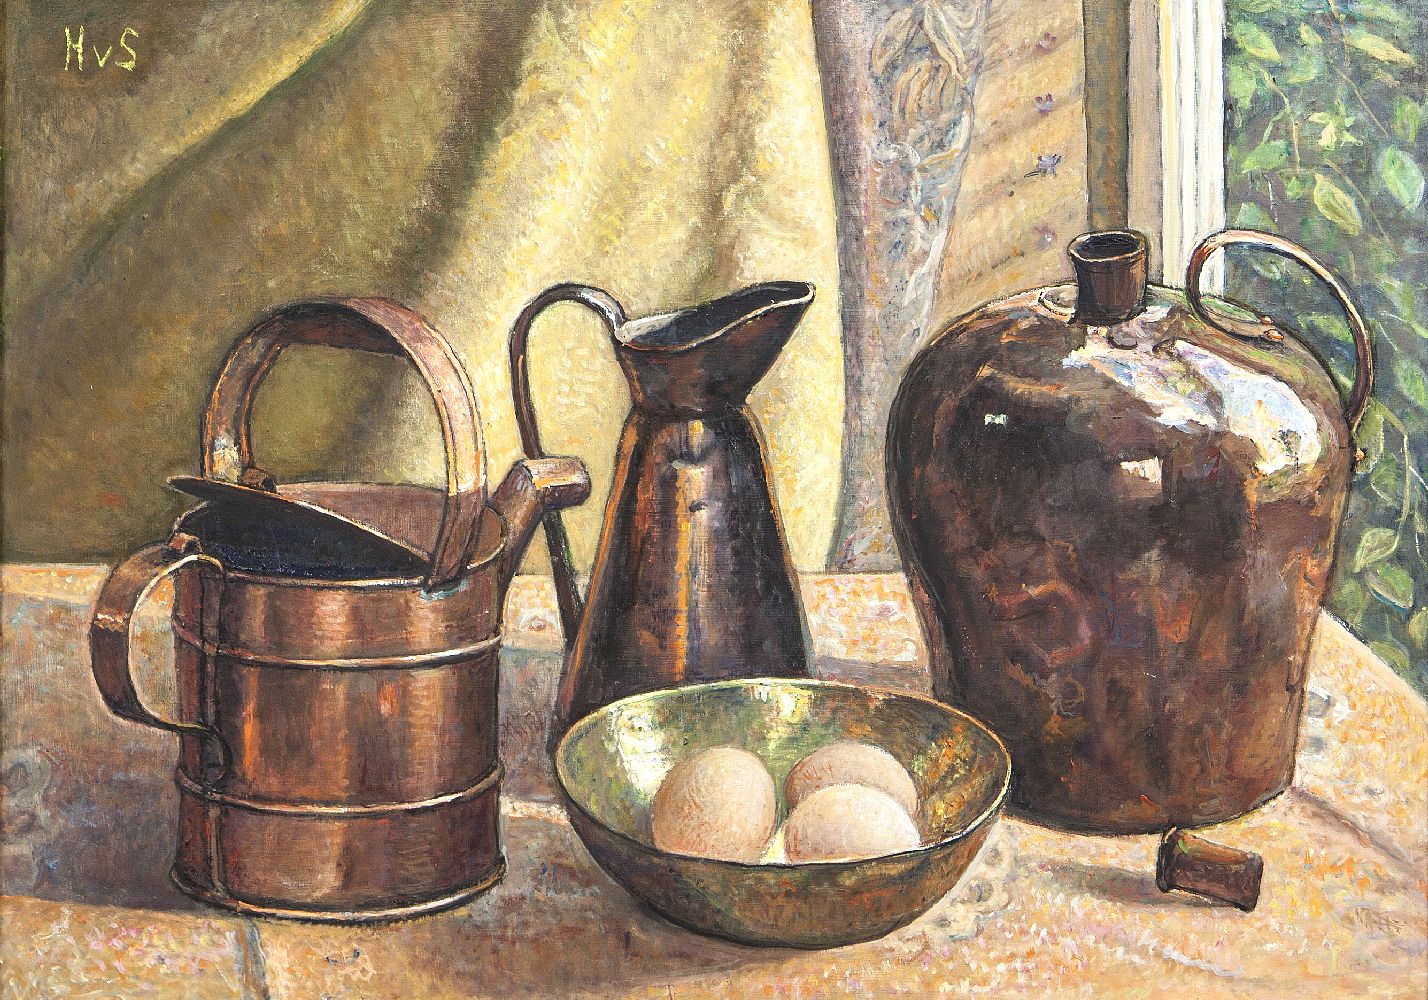 Hilda Van Stockum HRHA (1908 - 2006)Three Copper Vessels, Brass Bowl with EggsOil on board, 41 x